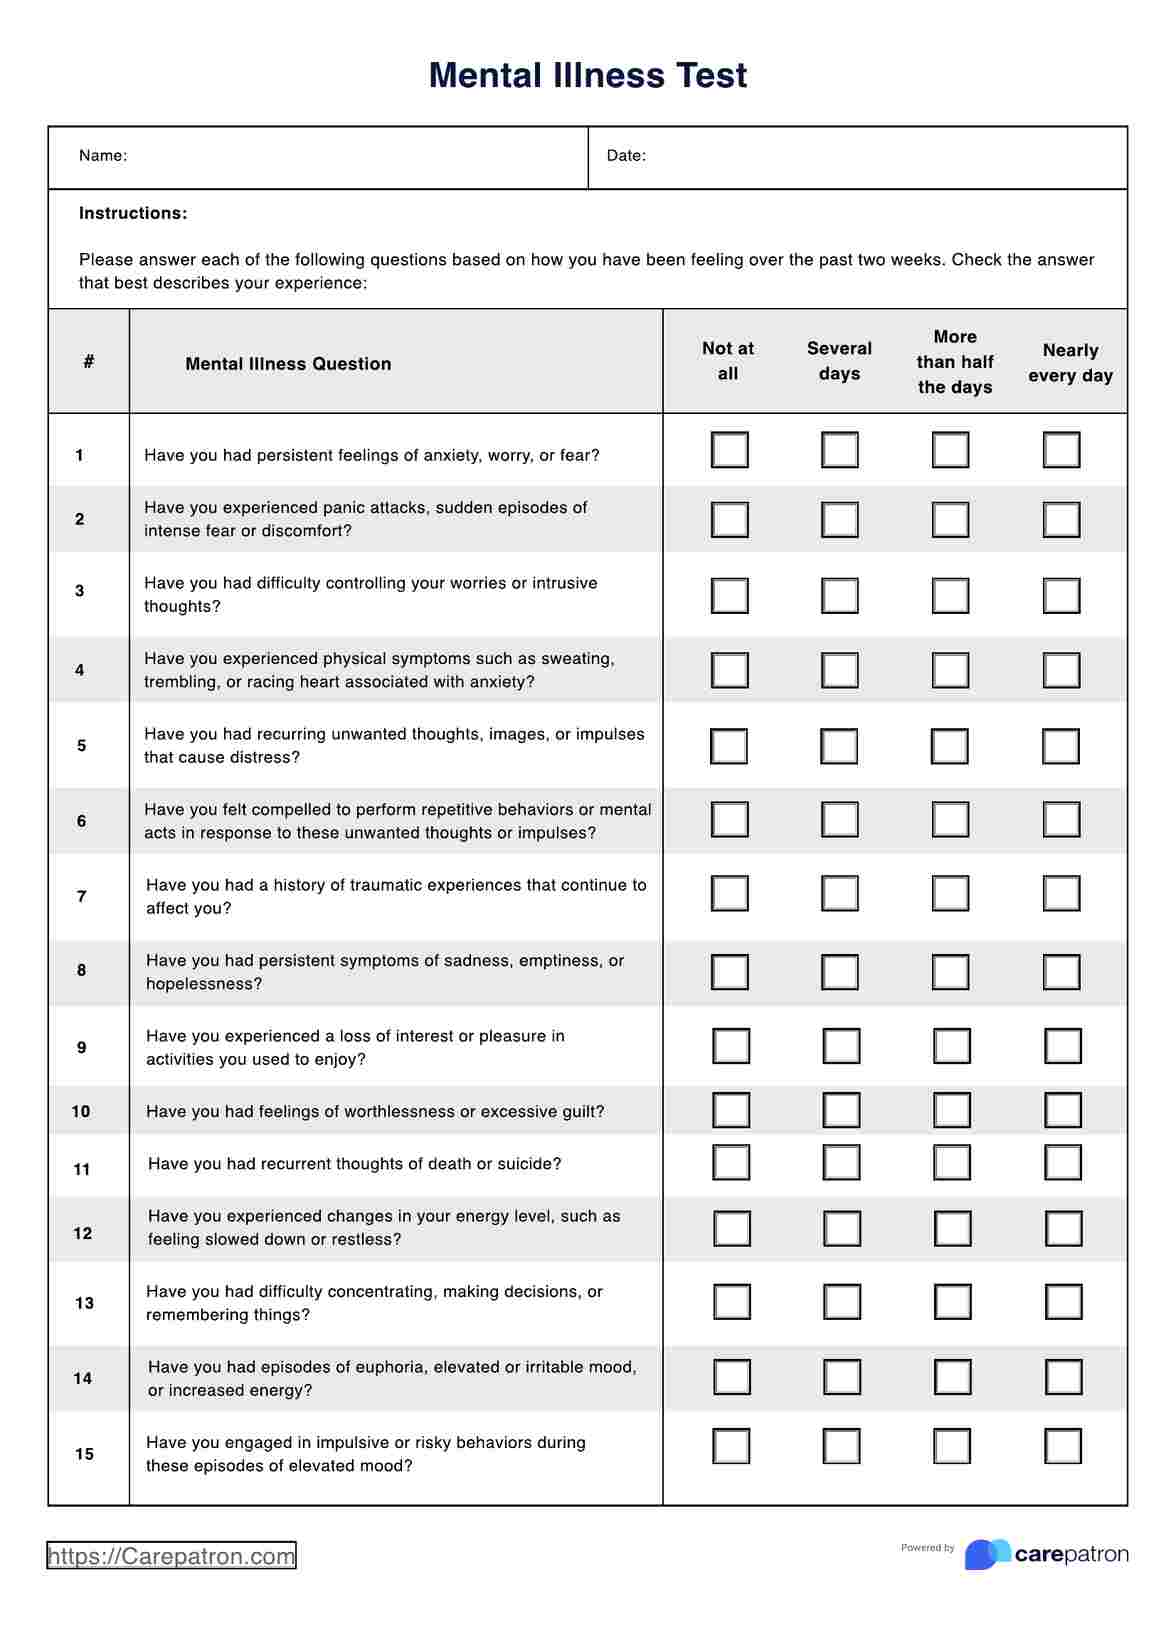 Mental Illness Test PDF Example